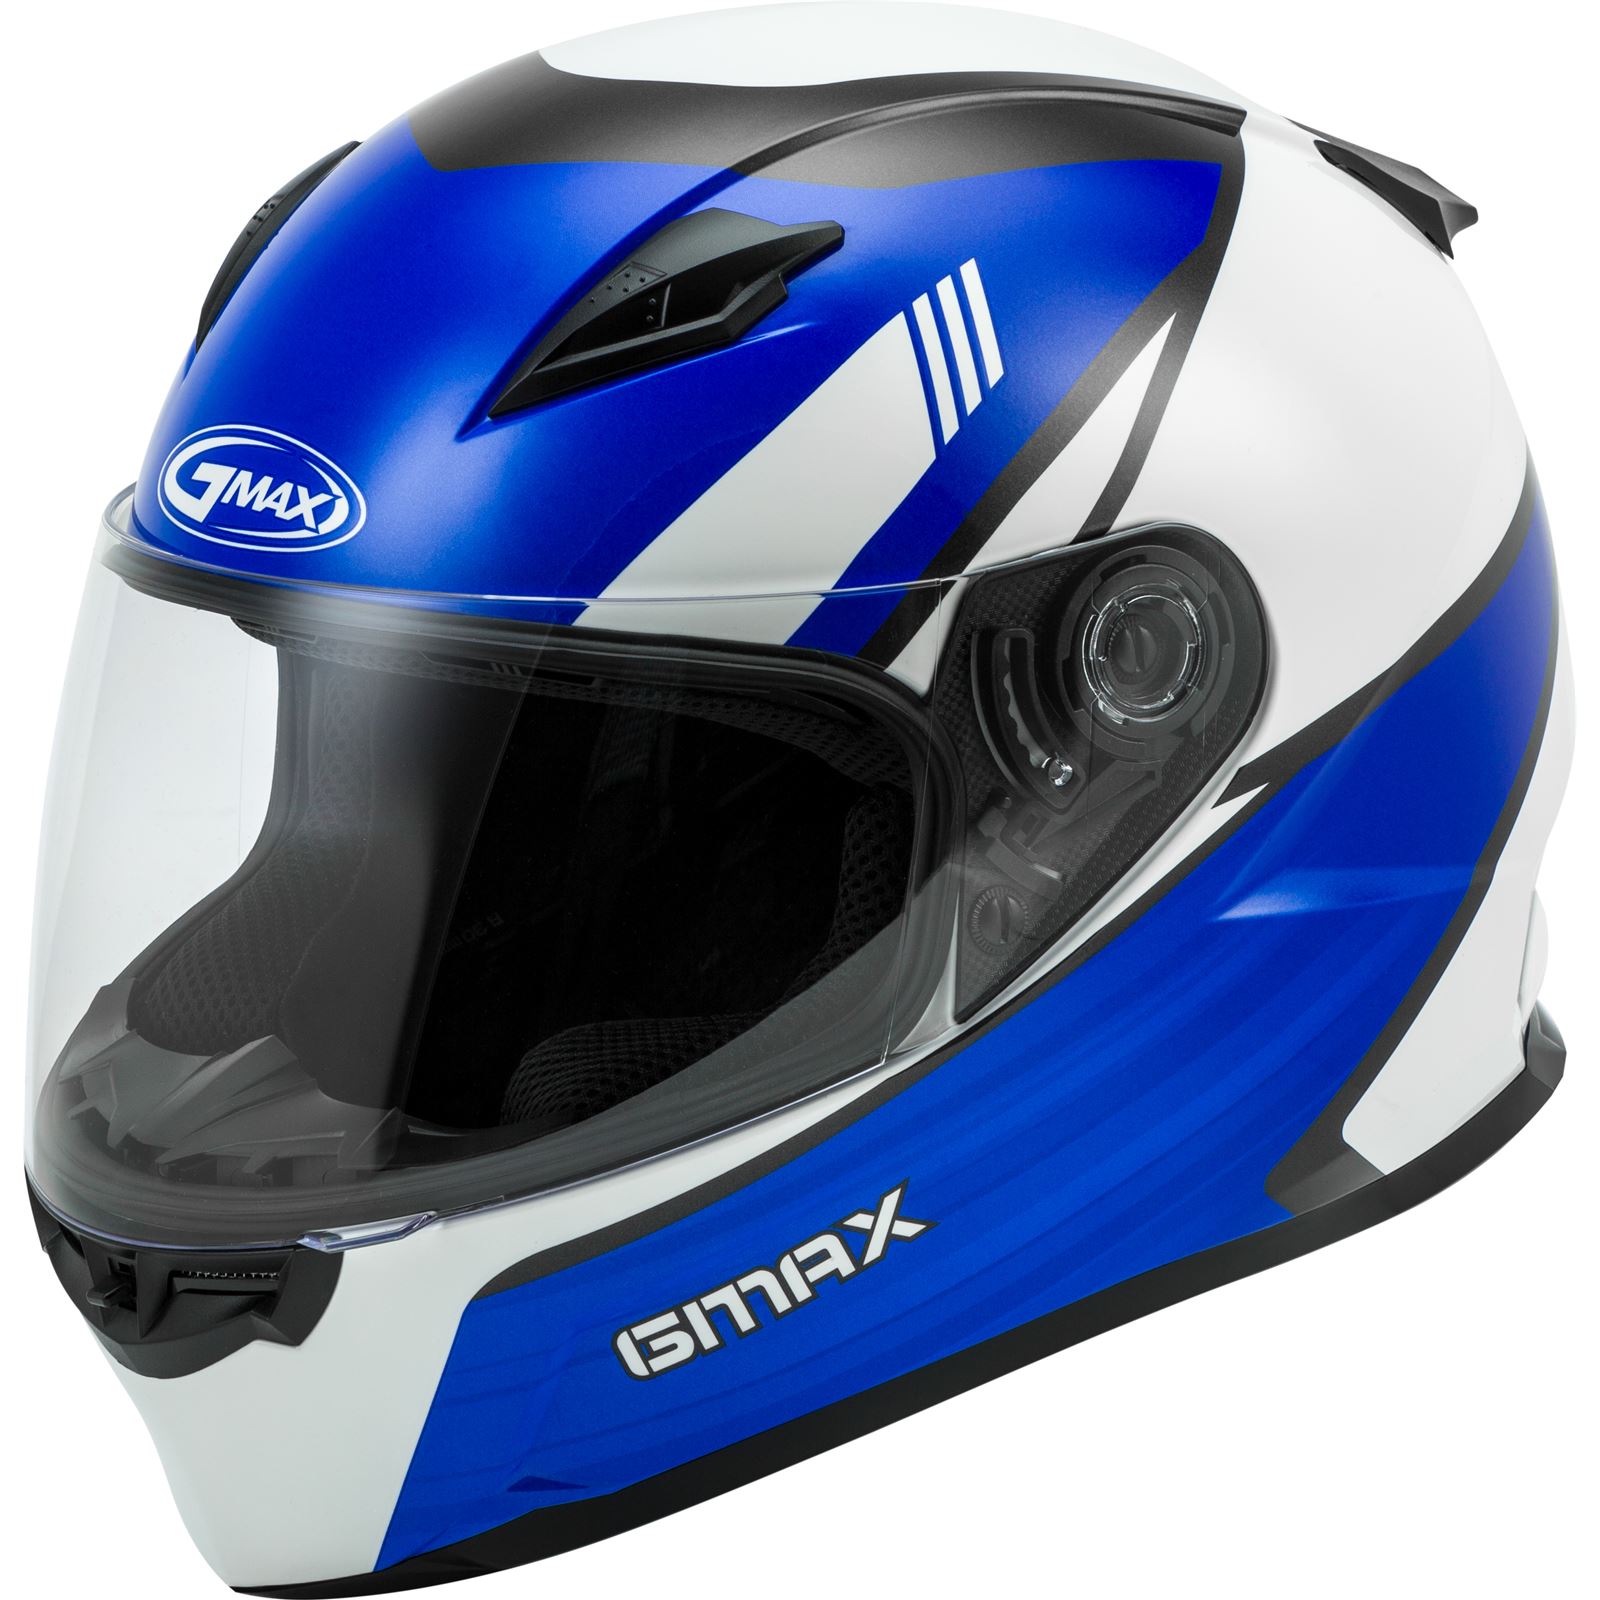 GMax Youth GM-49Y Helmet